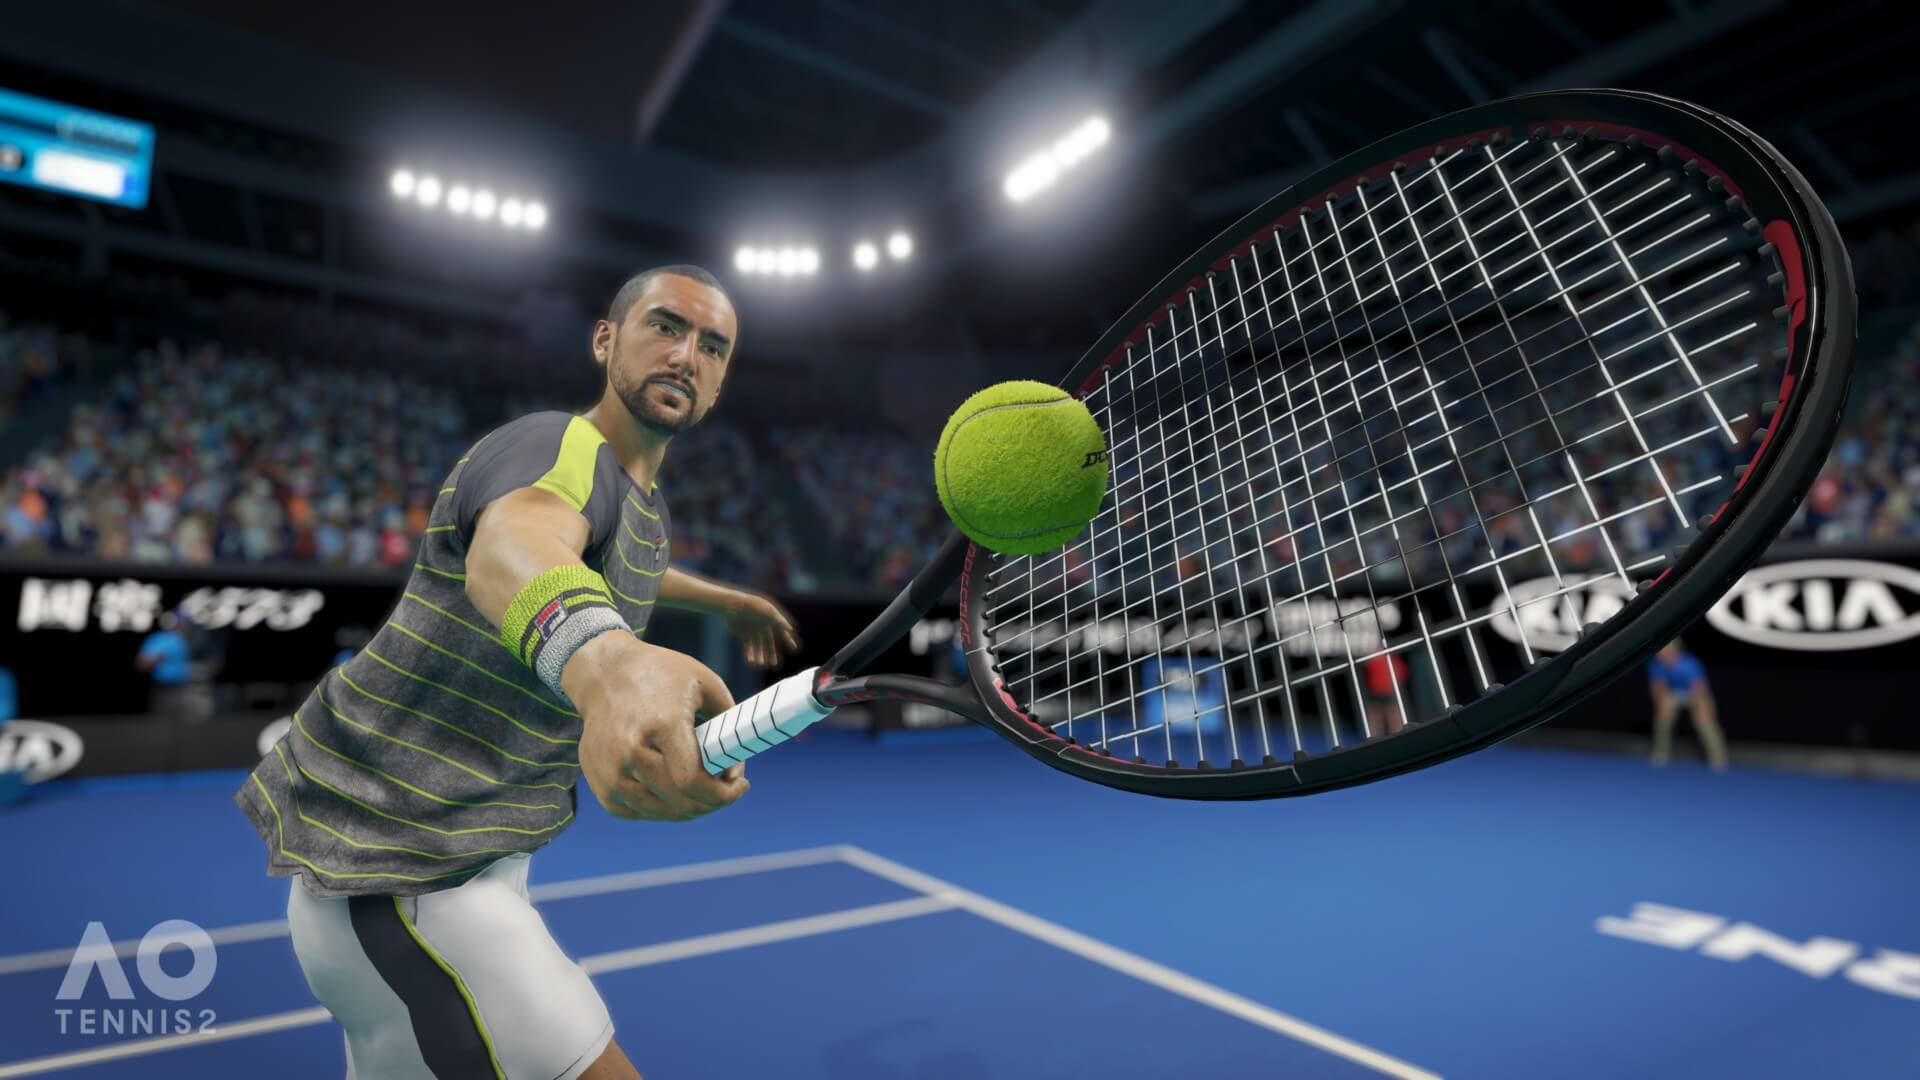 Ao Tennis 2 Reveal Screenshot 3